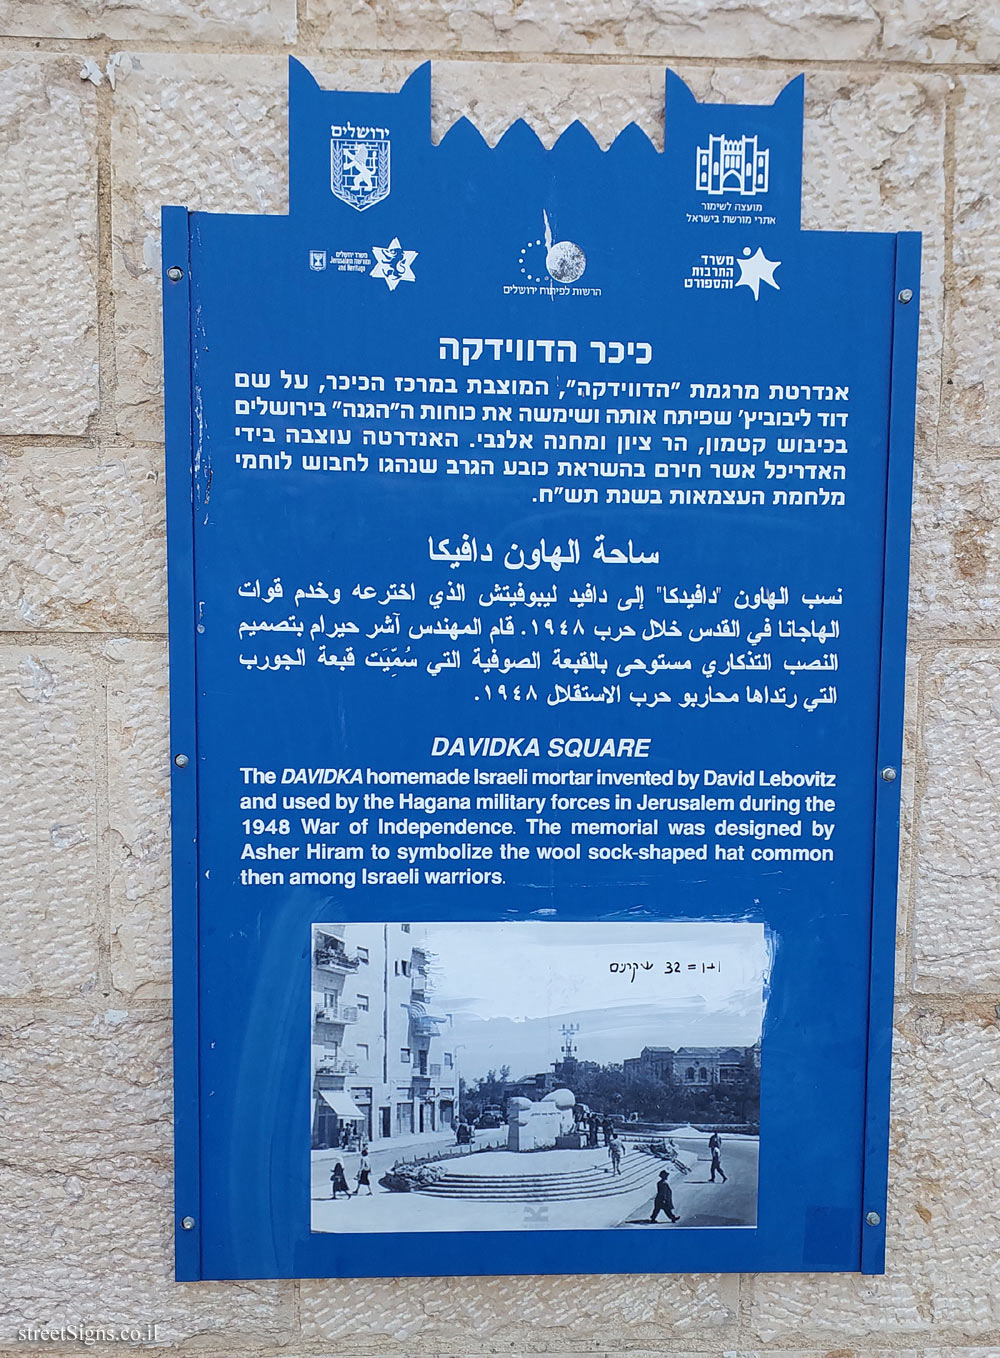 Jerusalem - Heritage Sites in Israel - Davidka Square